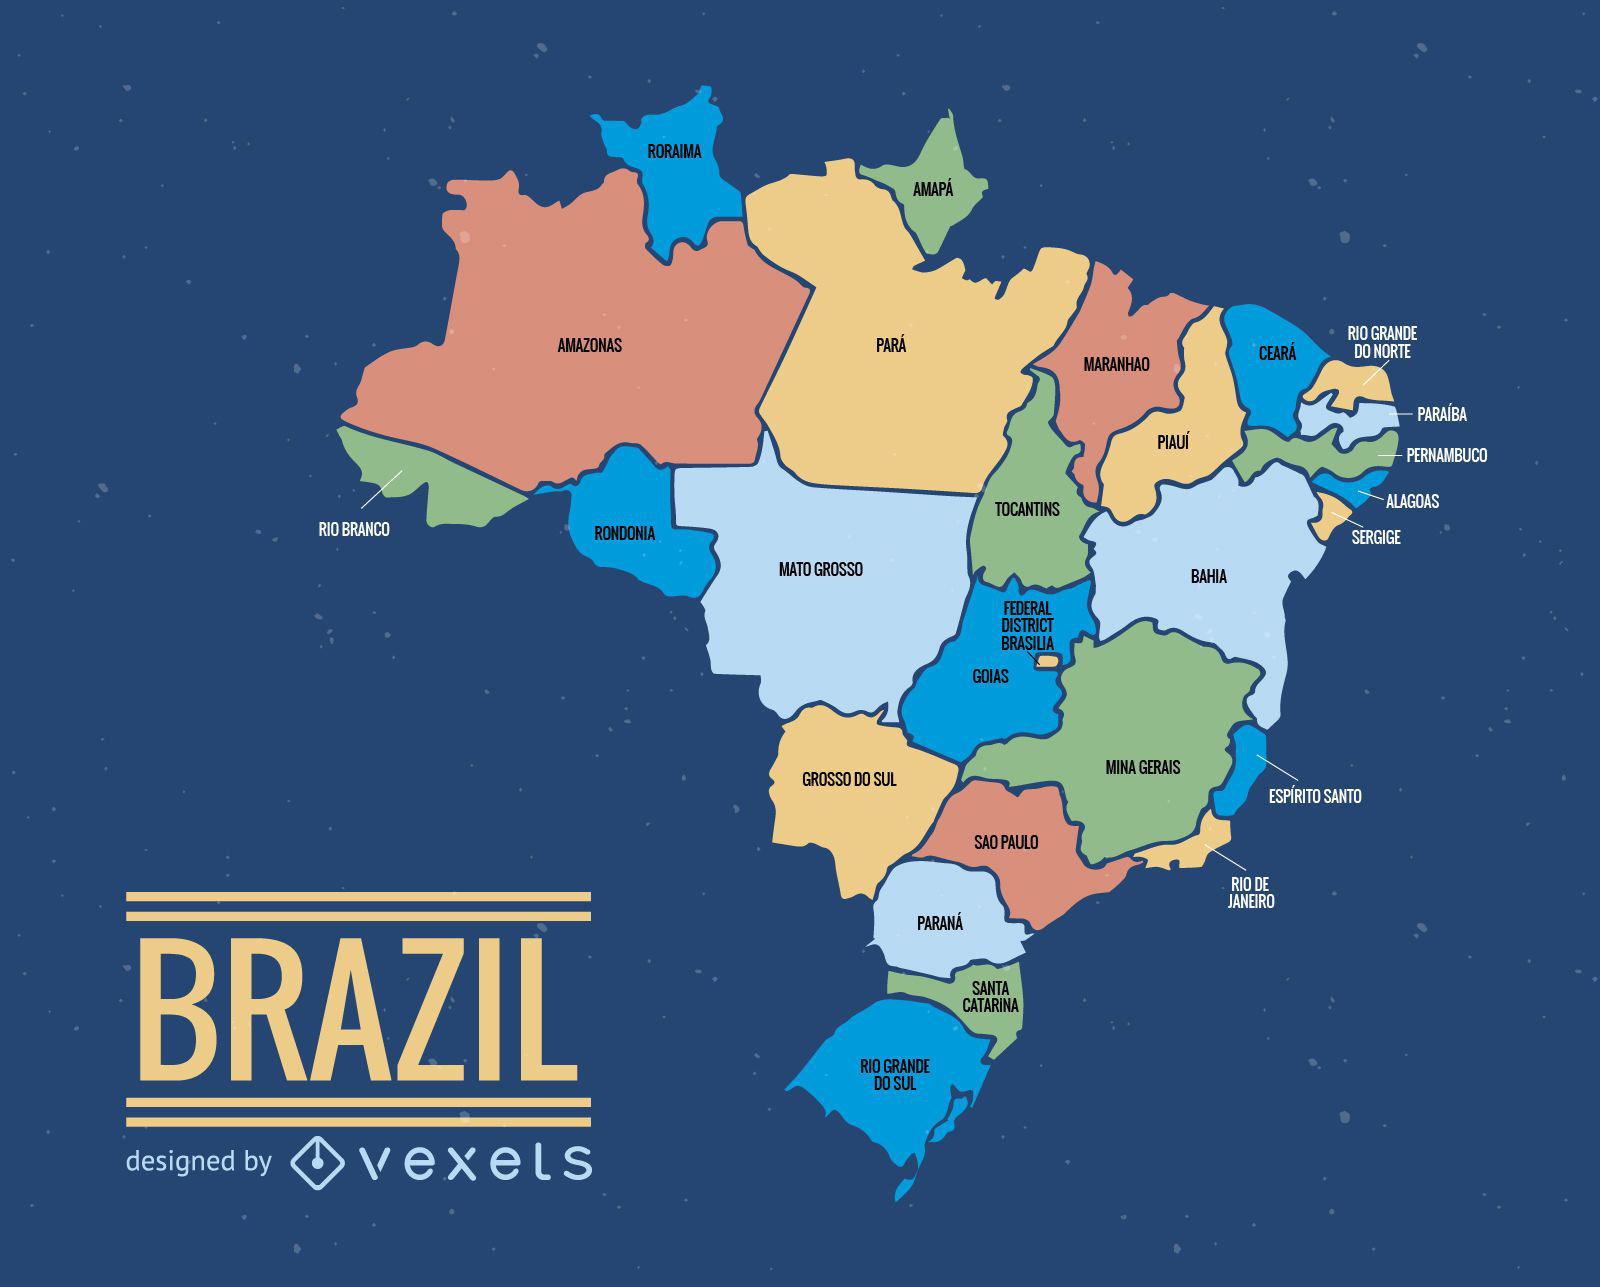 Descarga Vector De Ilustración De Mapa De Brasil